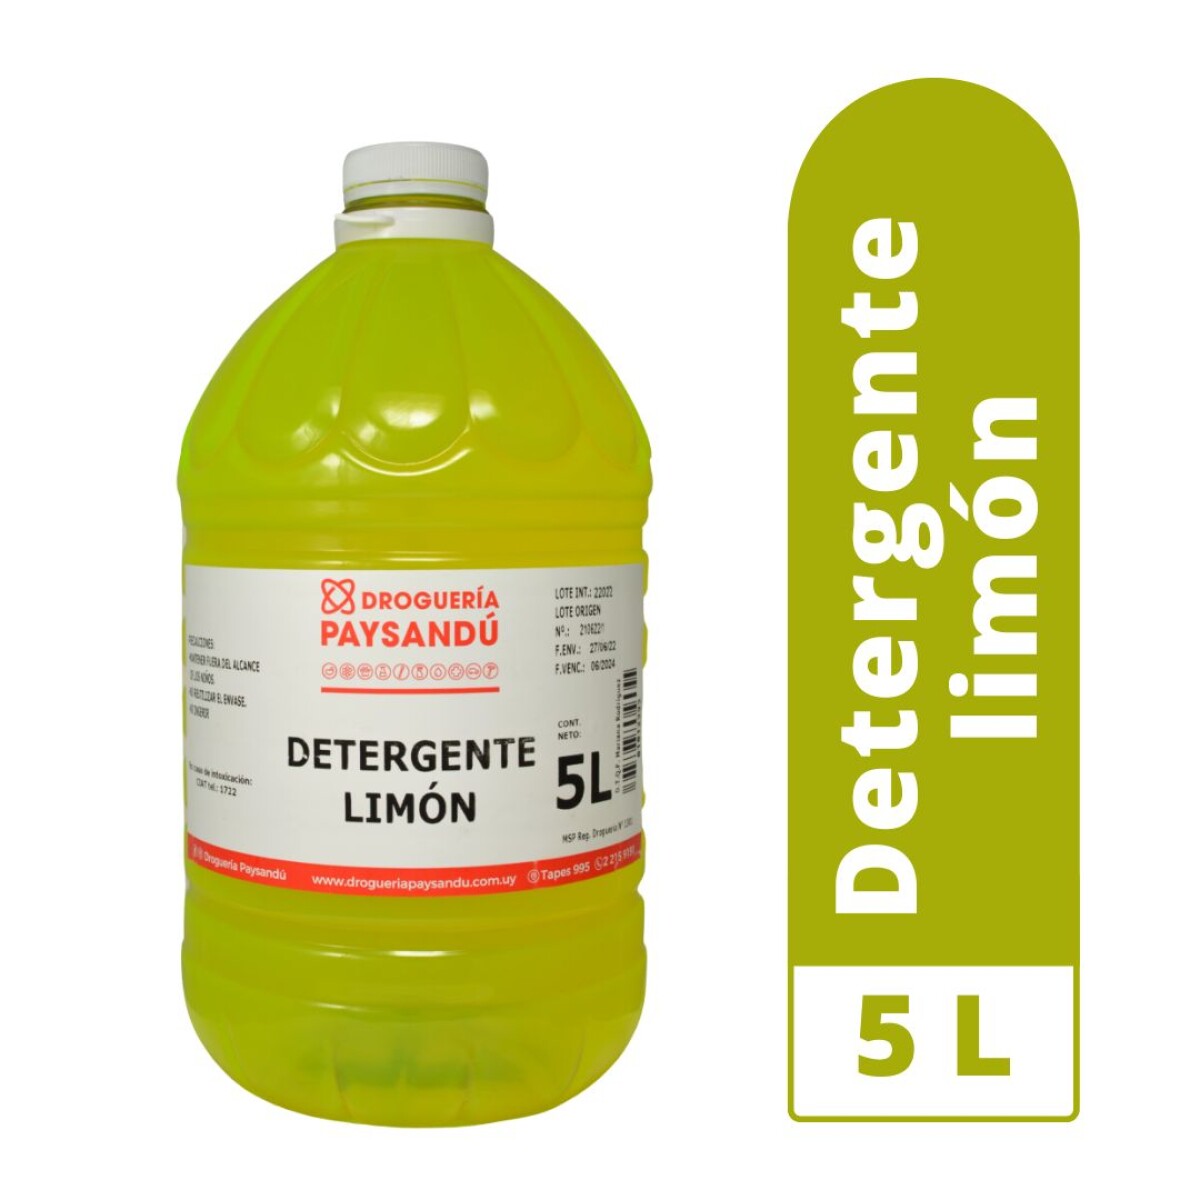 Detergente Limón - 5 L 